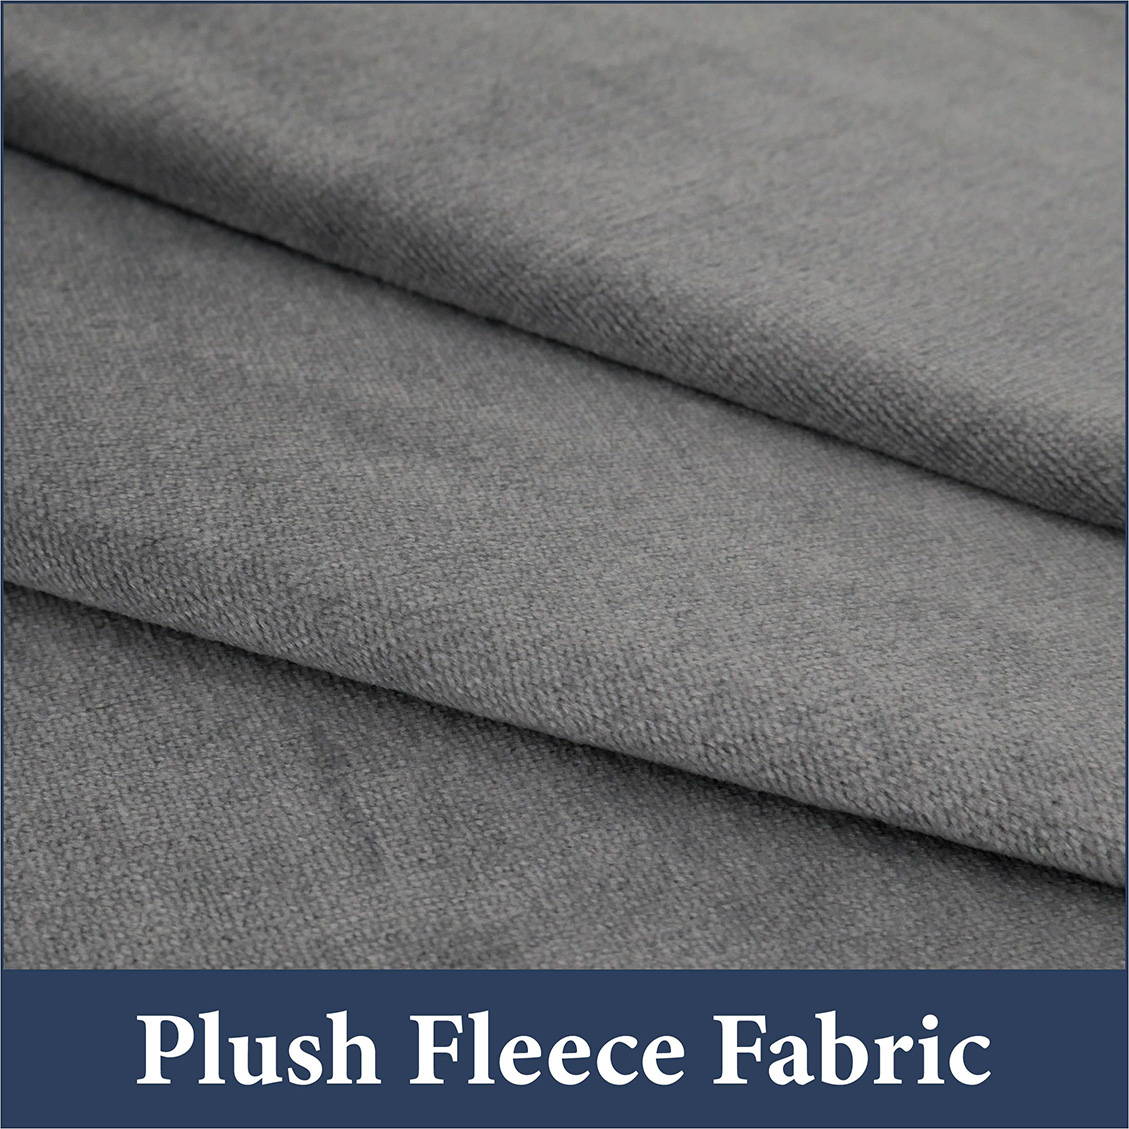 Plush fleece fabric swatch